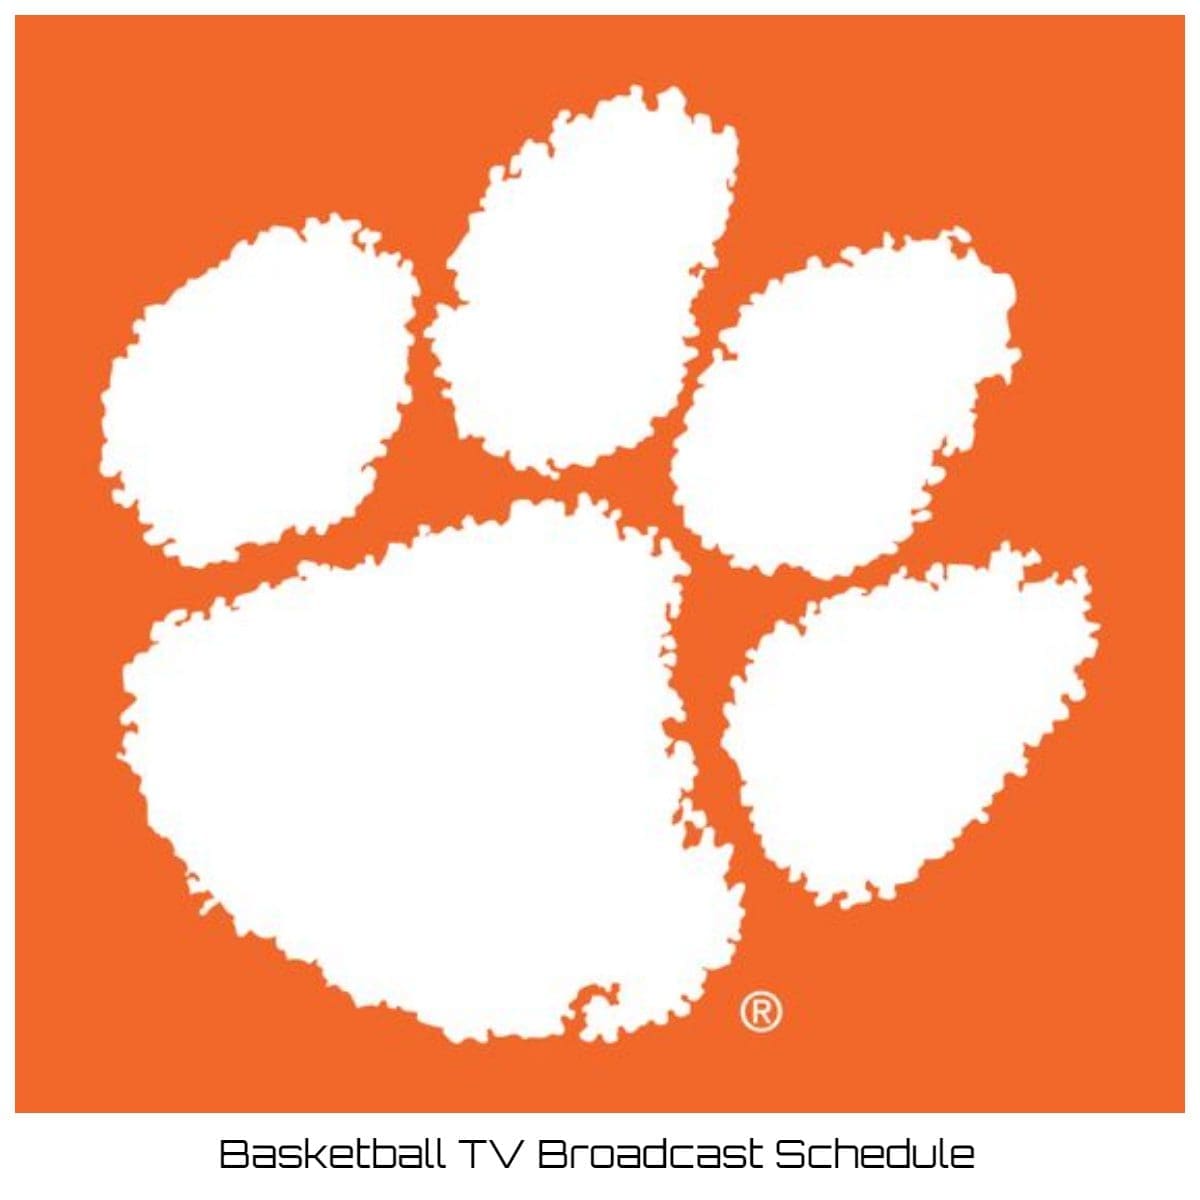 Clemson Tigers Basketball TV Broadcast Schedule